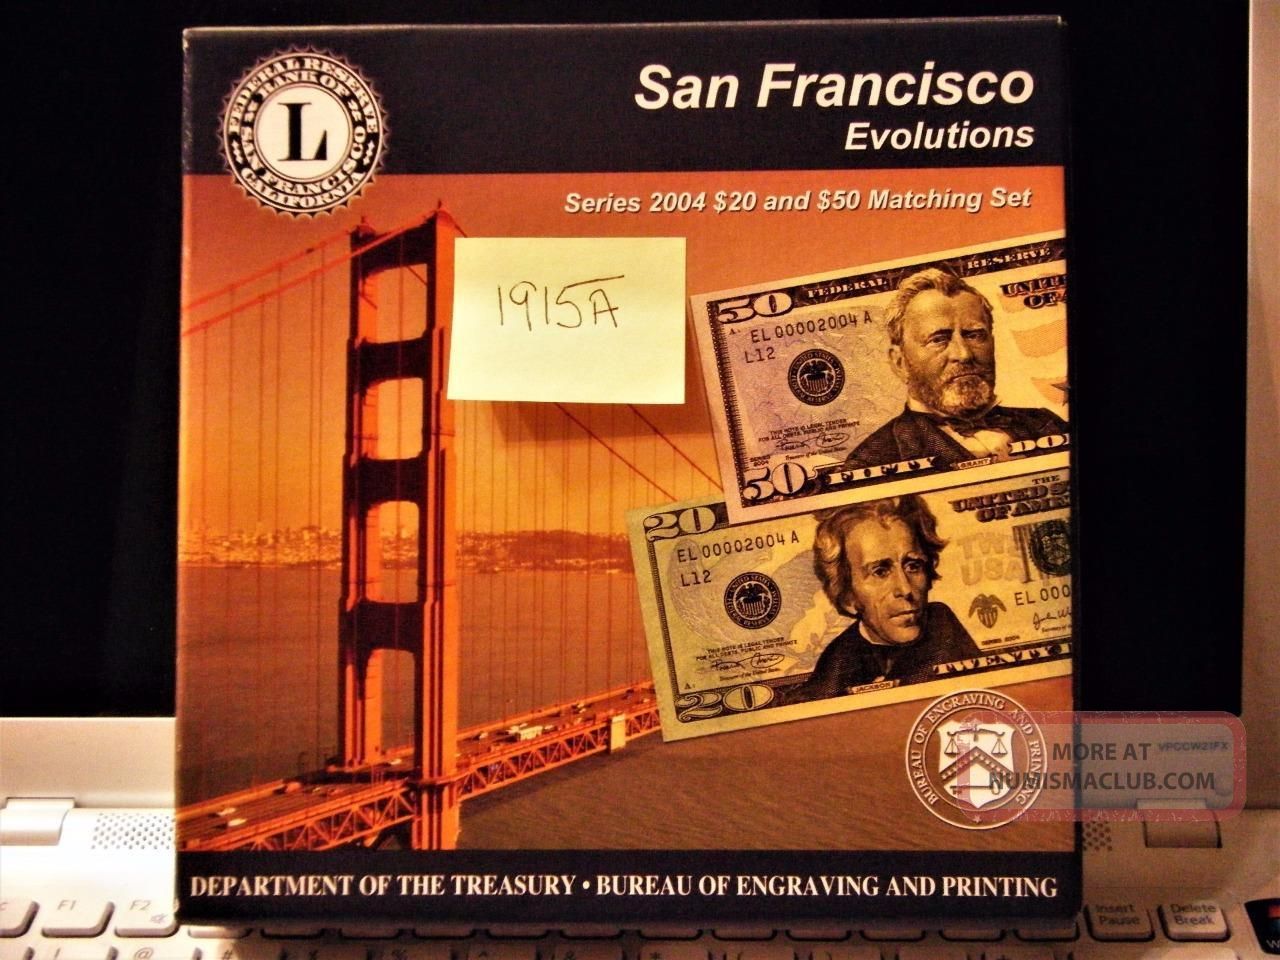 2004 $20 & $50 Evolution ' S San Francisco (l) : El00001915a W And Box 2301 Small Size Notes photo